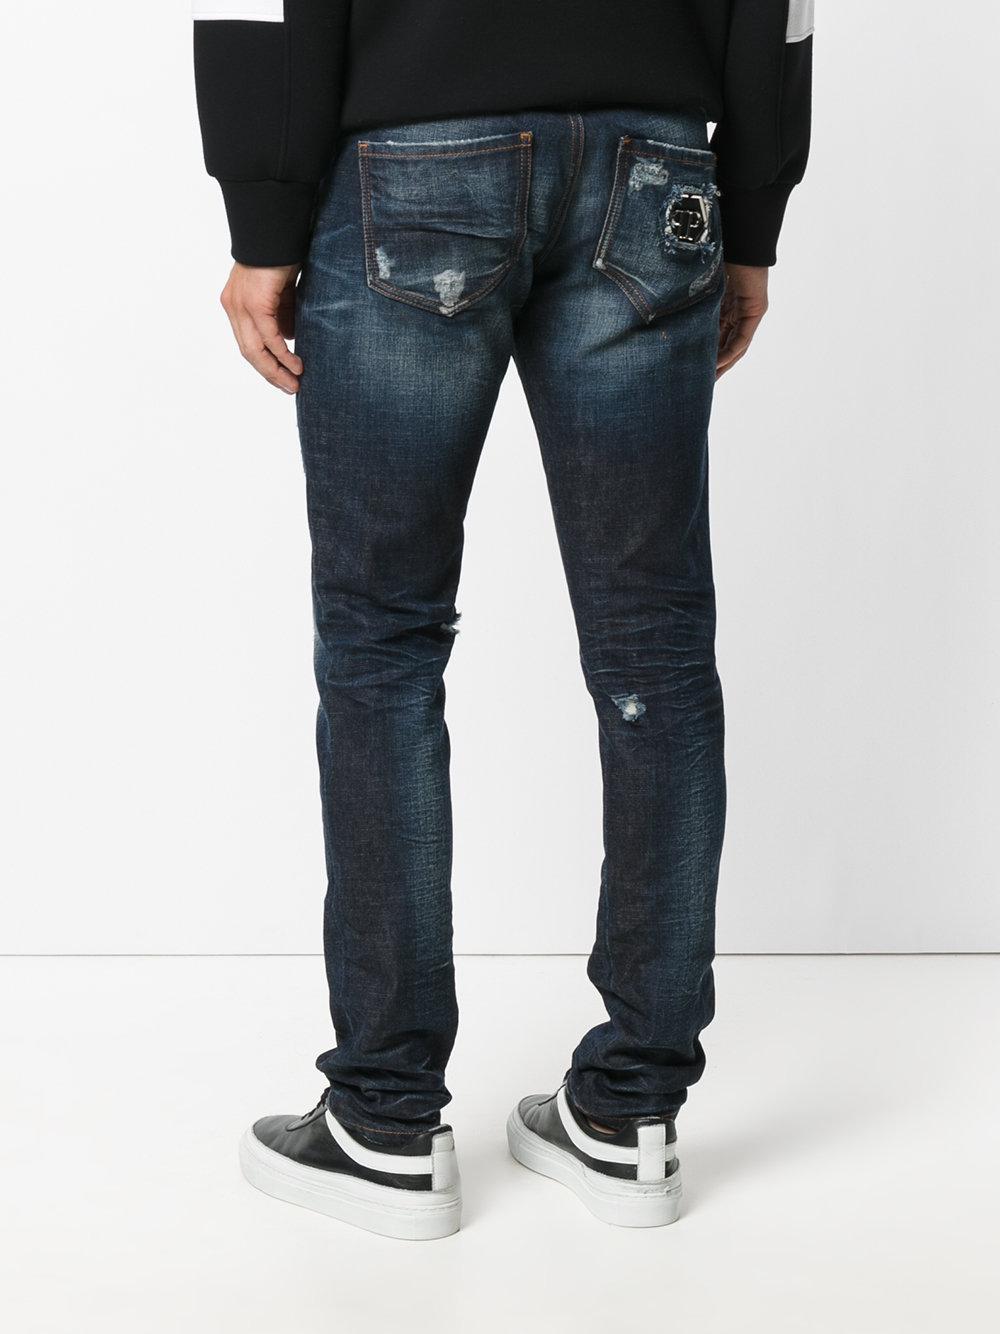 Lyst - Philipp Plein Classic Skinny Jeans in Blue for Men